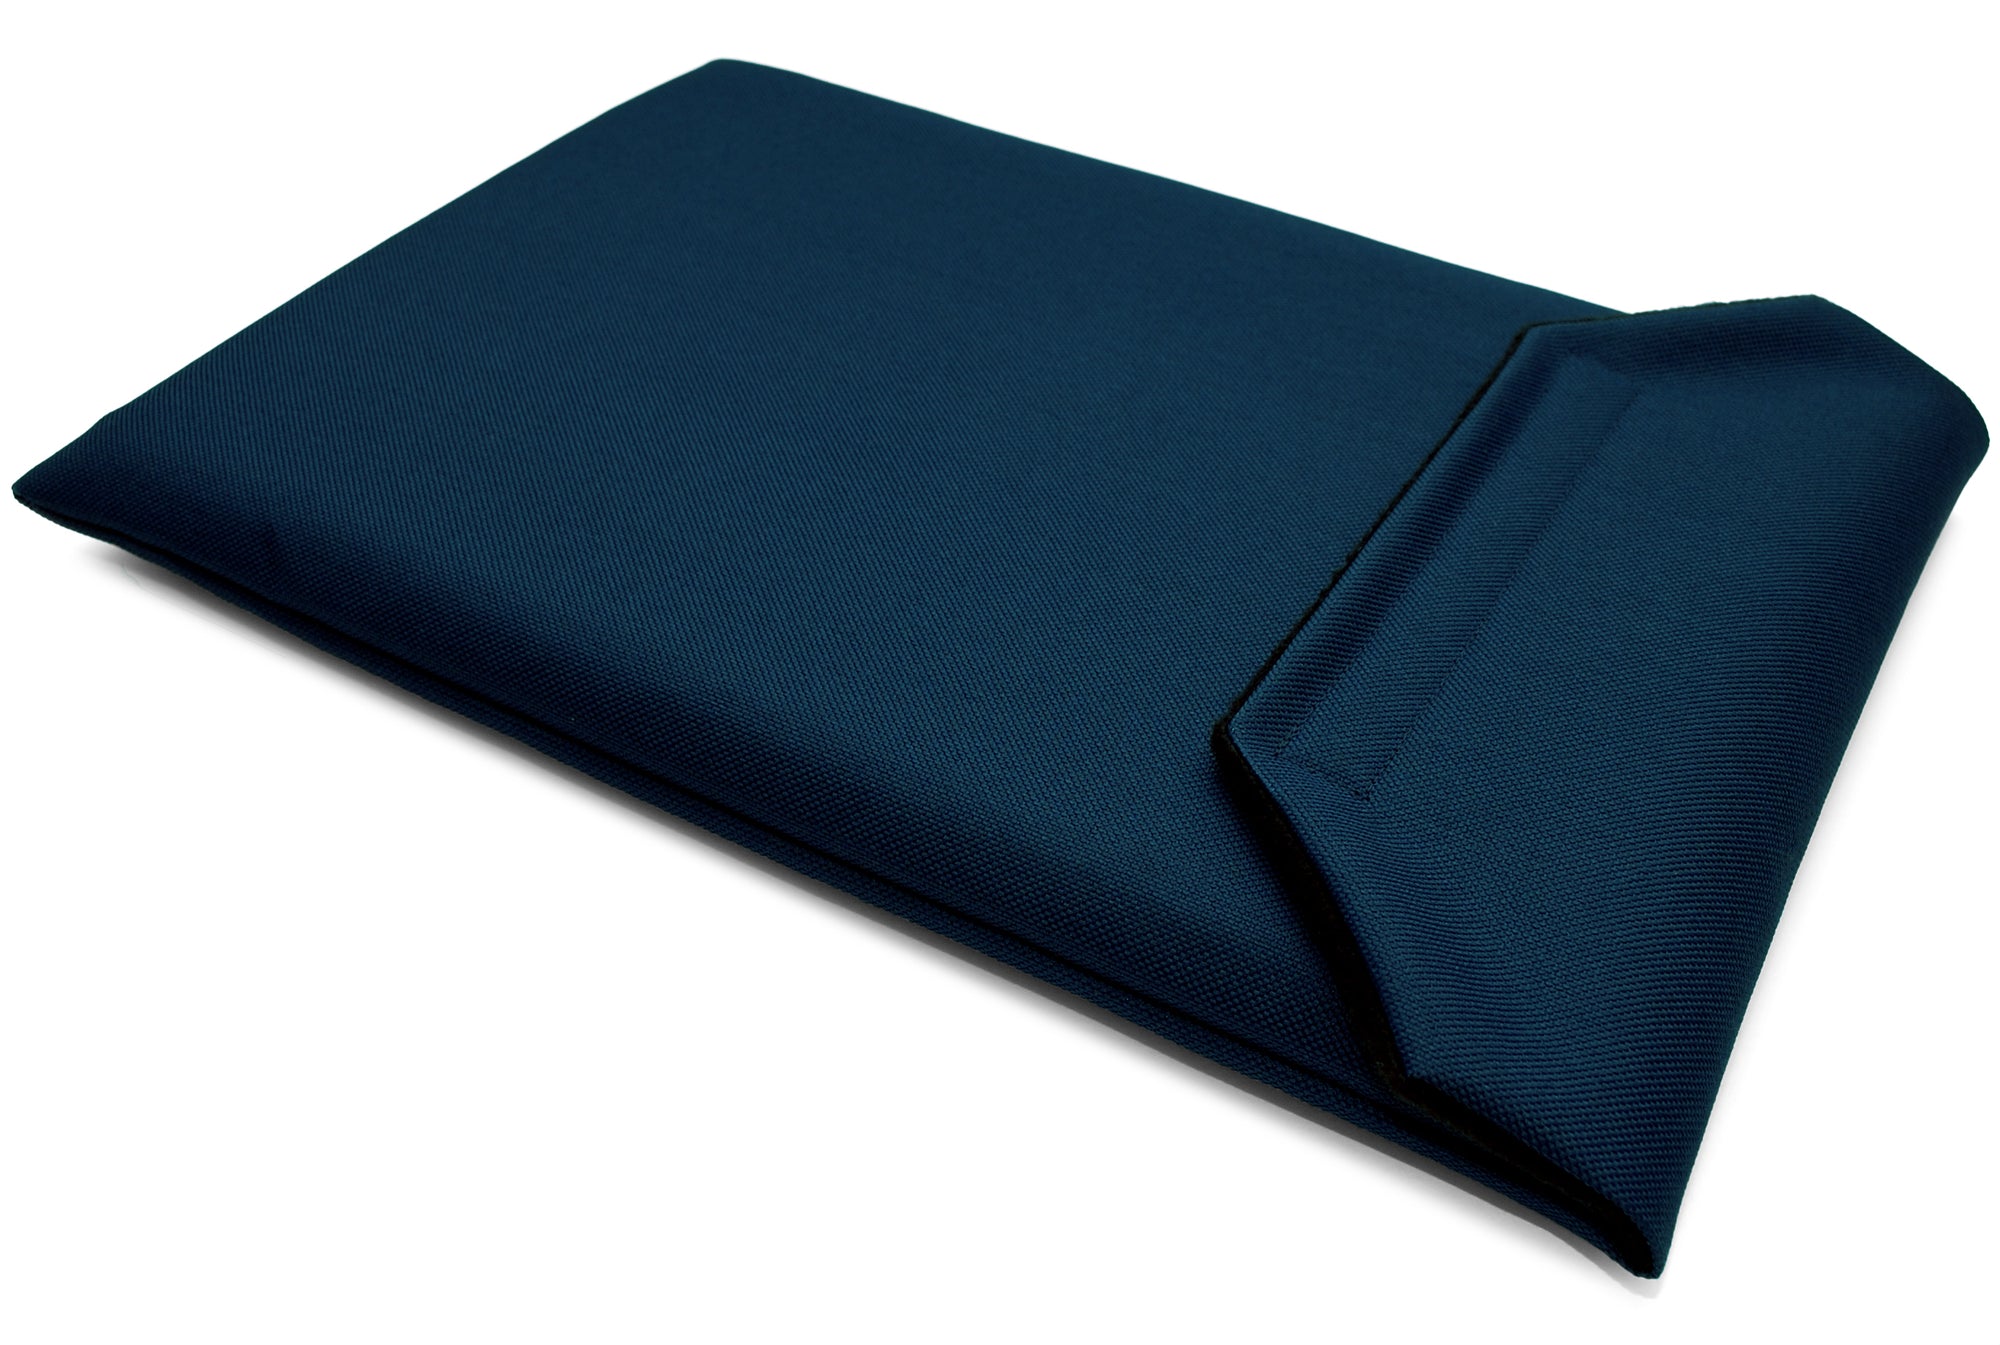 Dell Inspiron 14 5000 Sleeve Case - Navy Blue